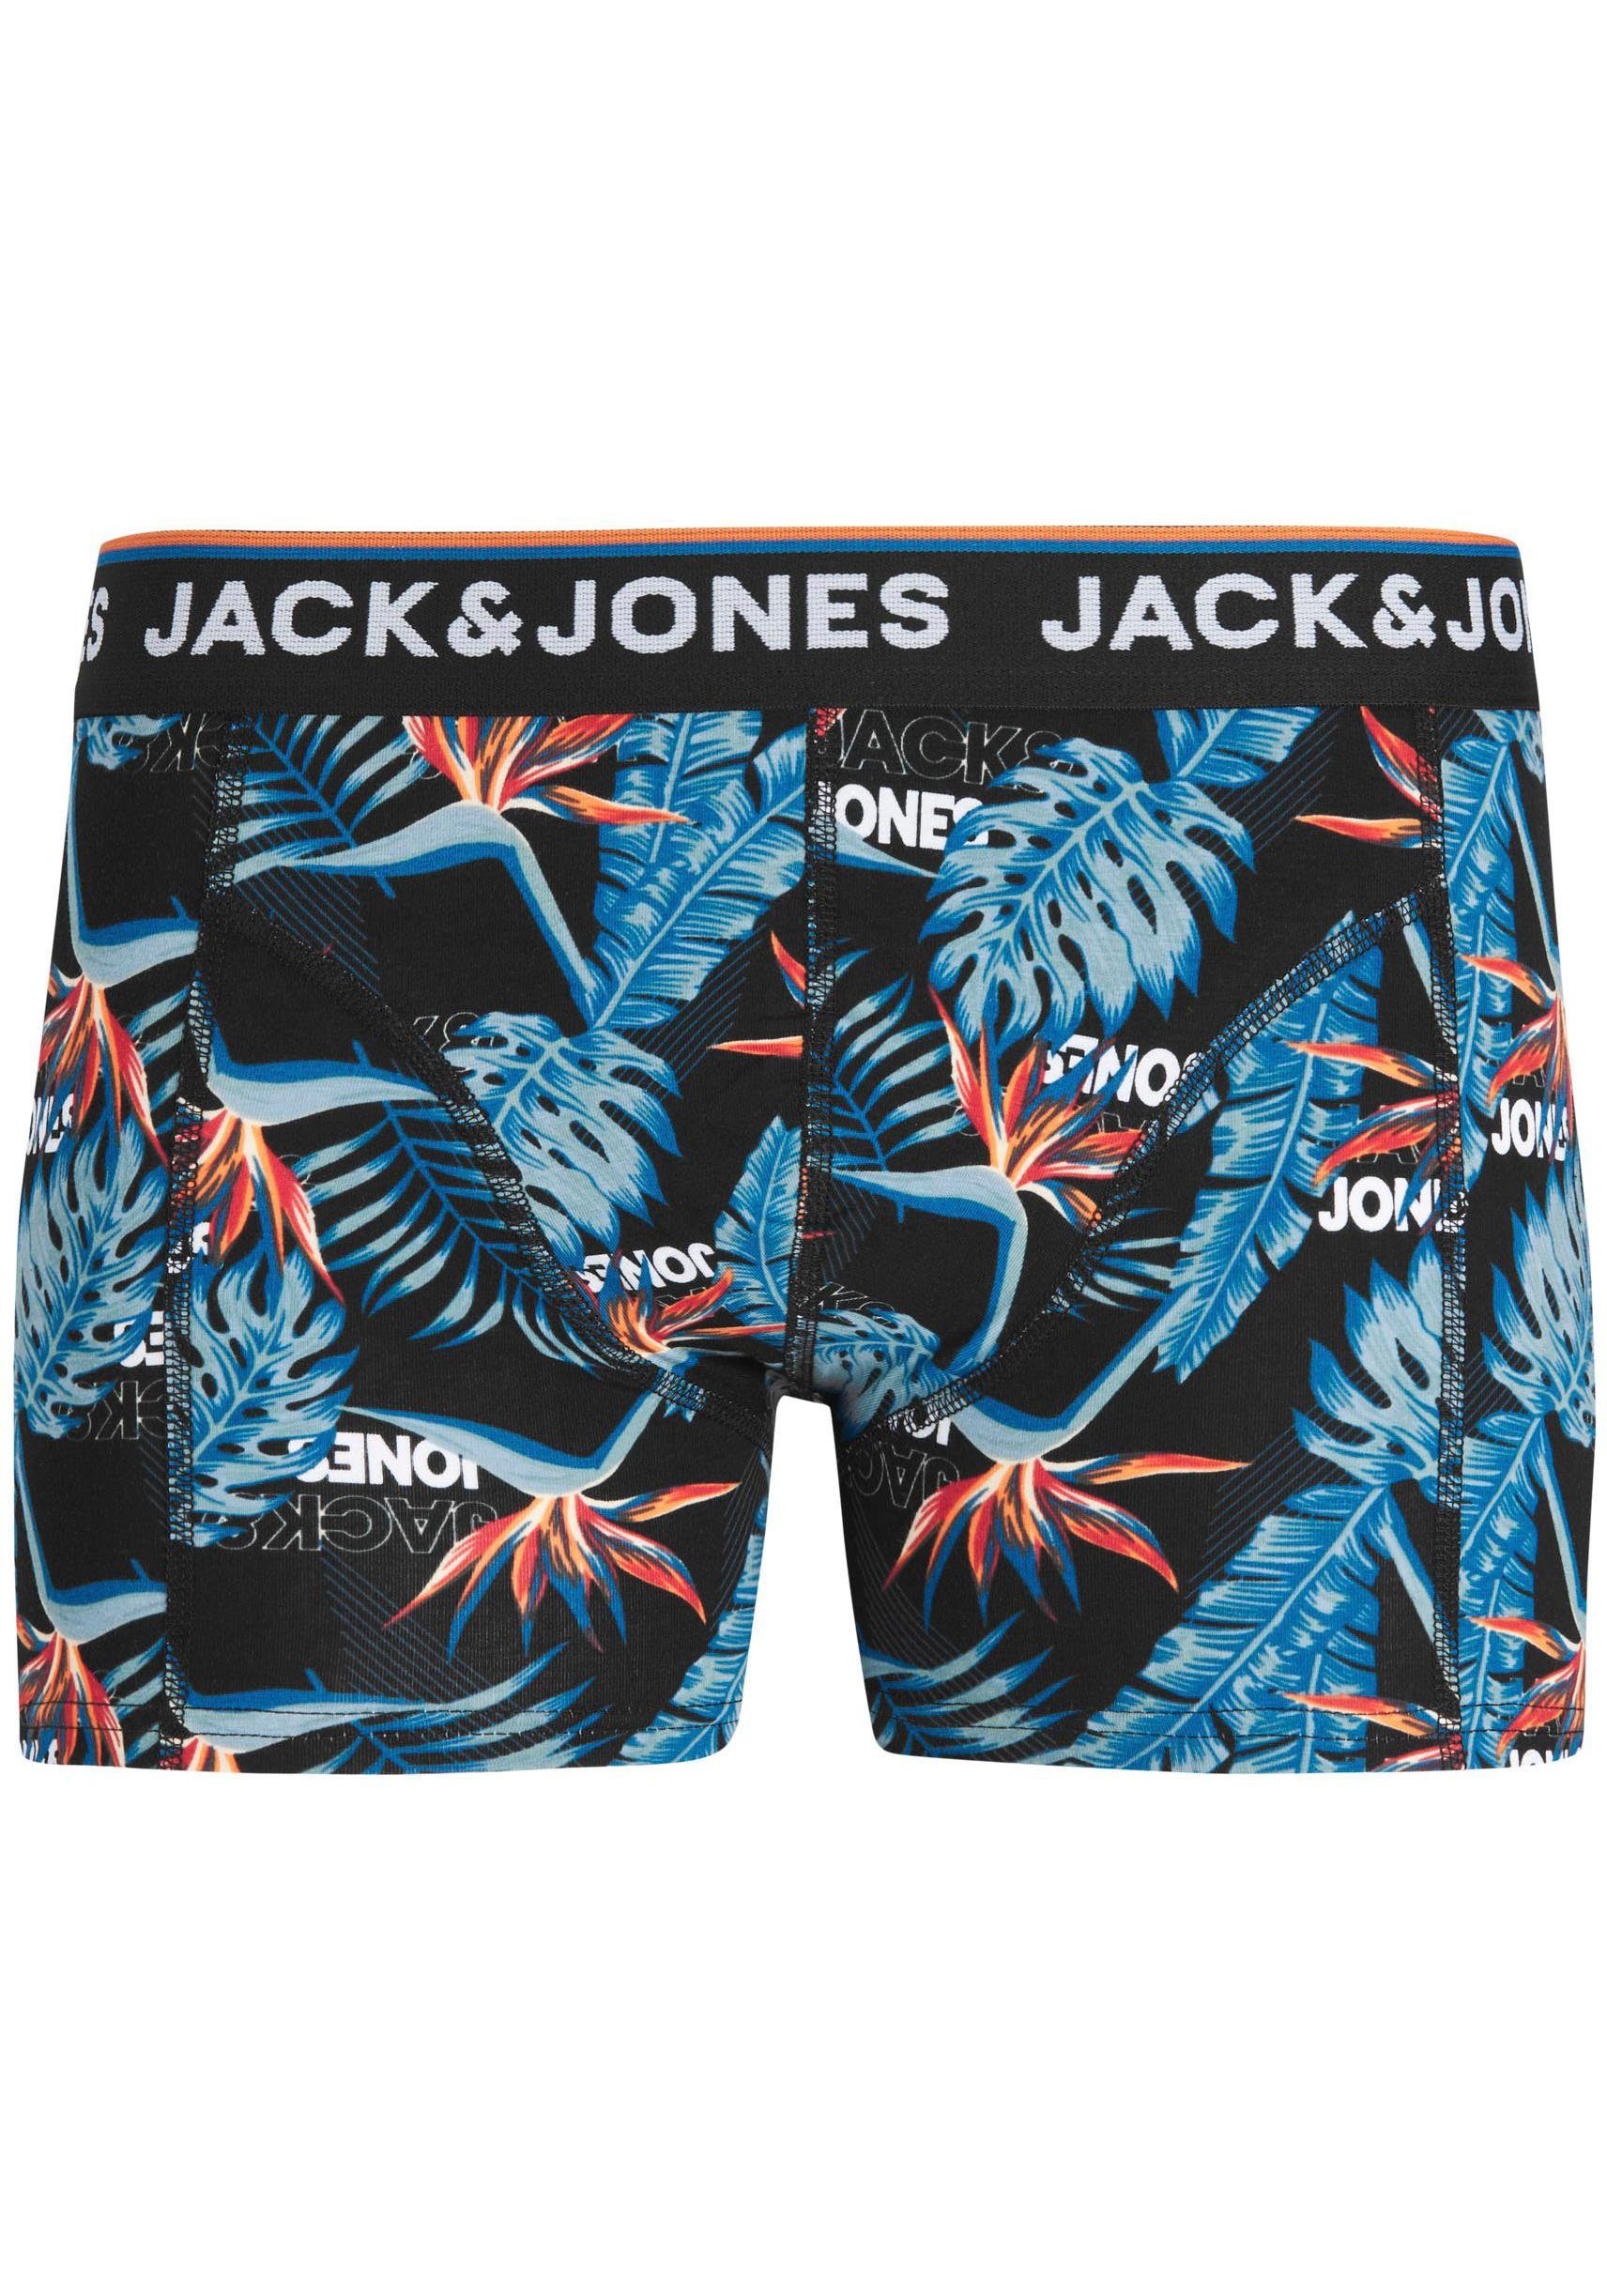 JNR & Jack NOOS 3-St) PACK JACAZORES Boxershorts Junior TRUNKS 3 Jones (Packung,